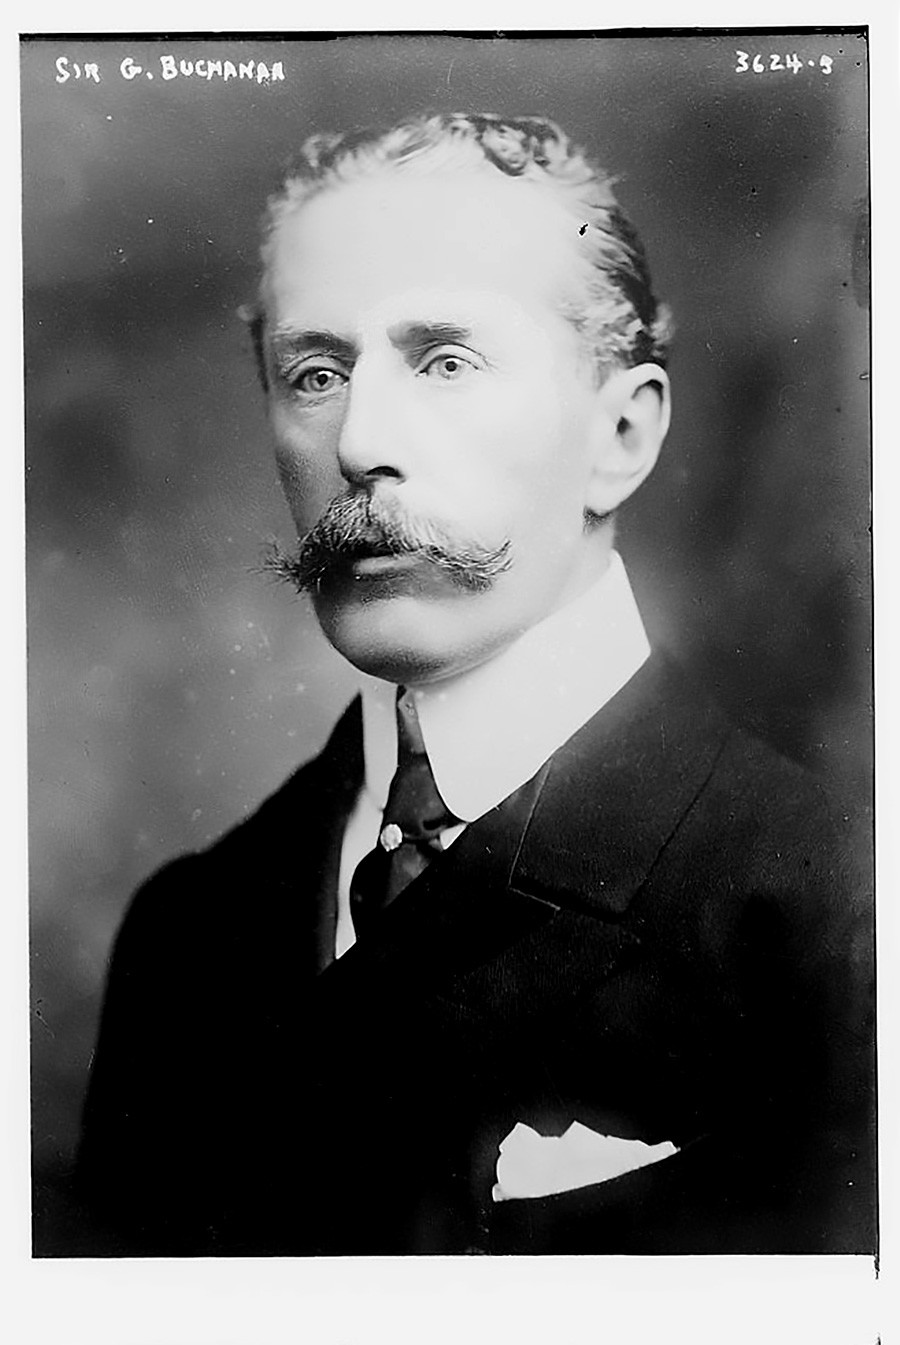 Sir George William Buchanan in 1915